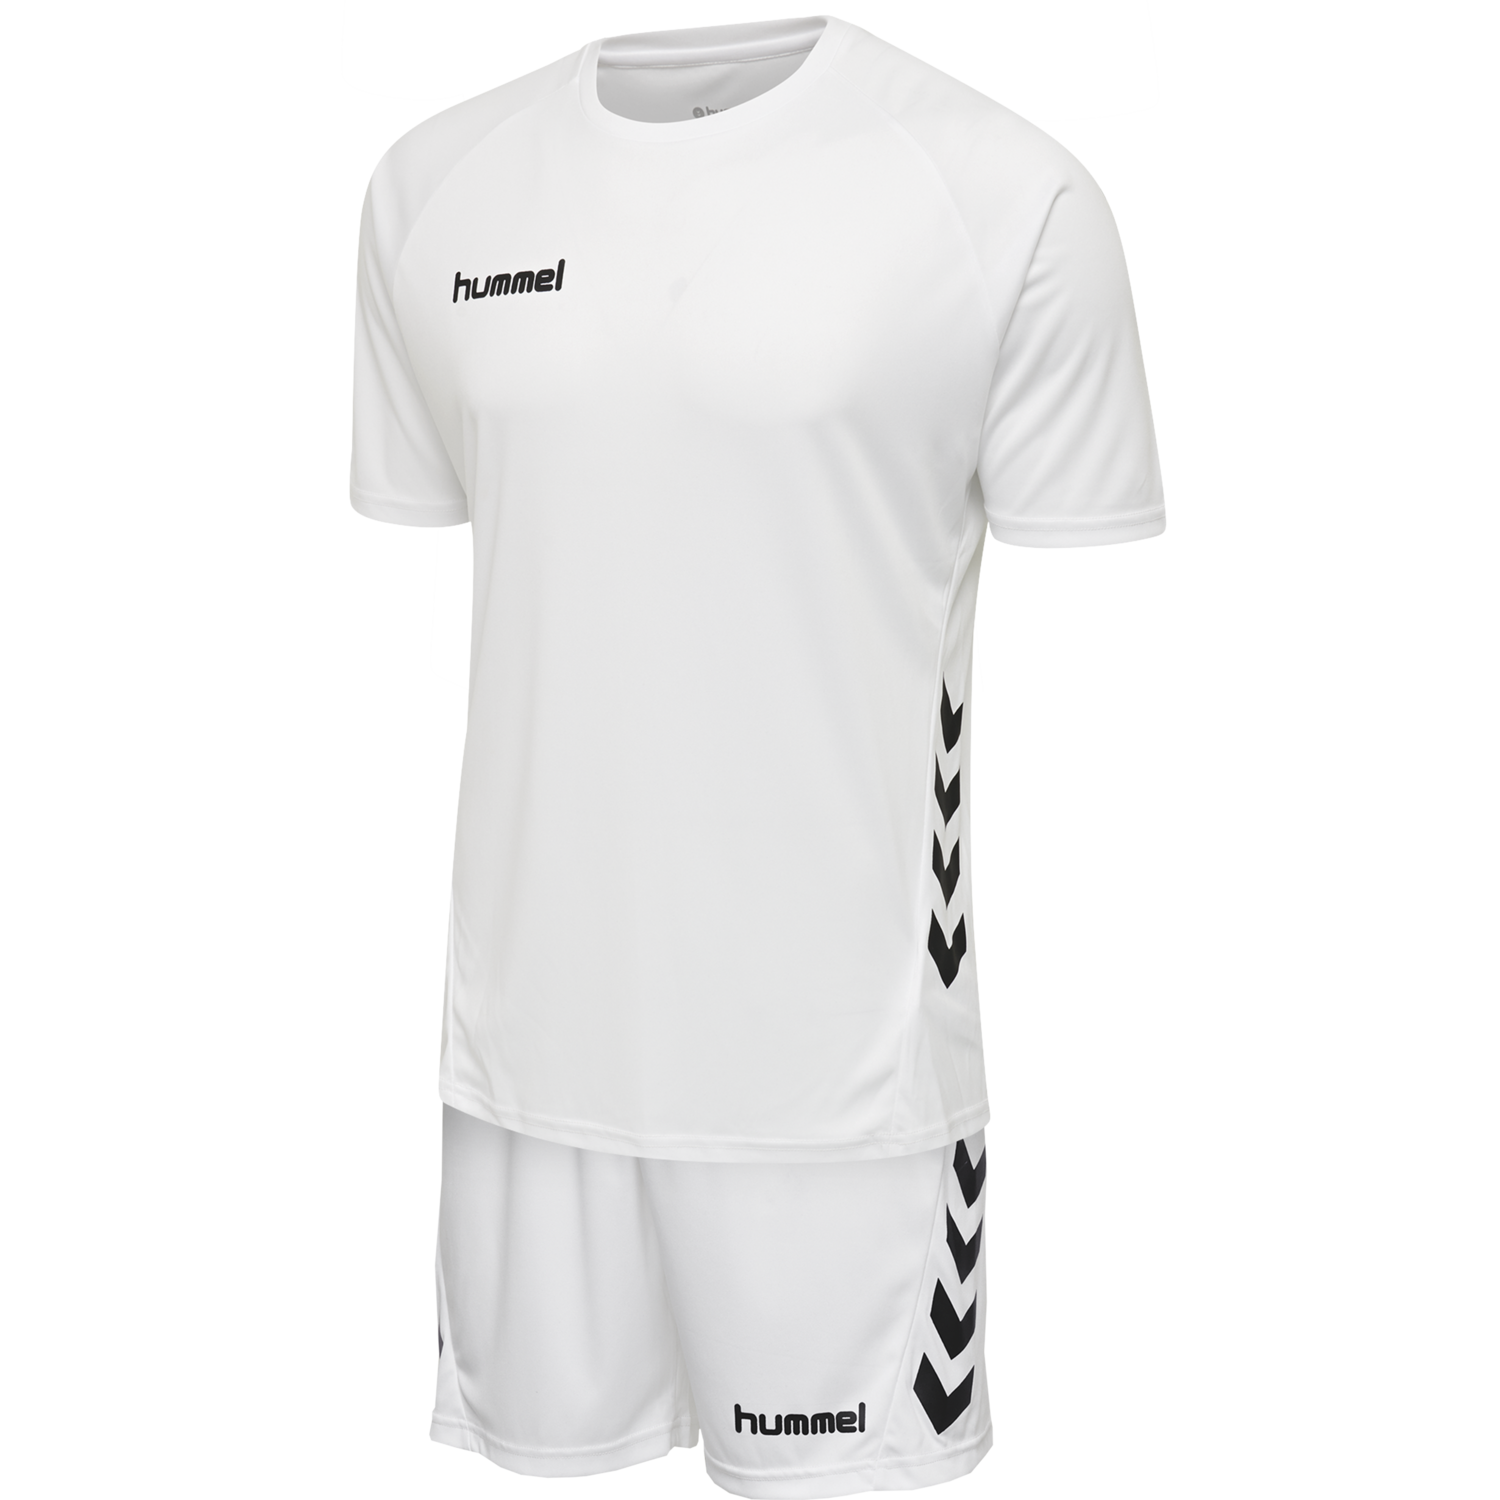 Details about   Hummel Football Soccer Mens Sports Training Kit/Set SS Jersey Shirt Shorts 